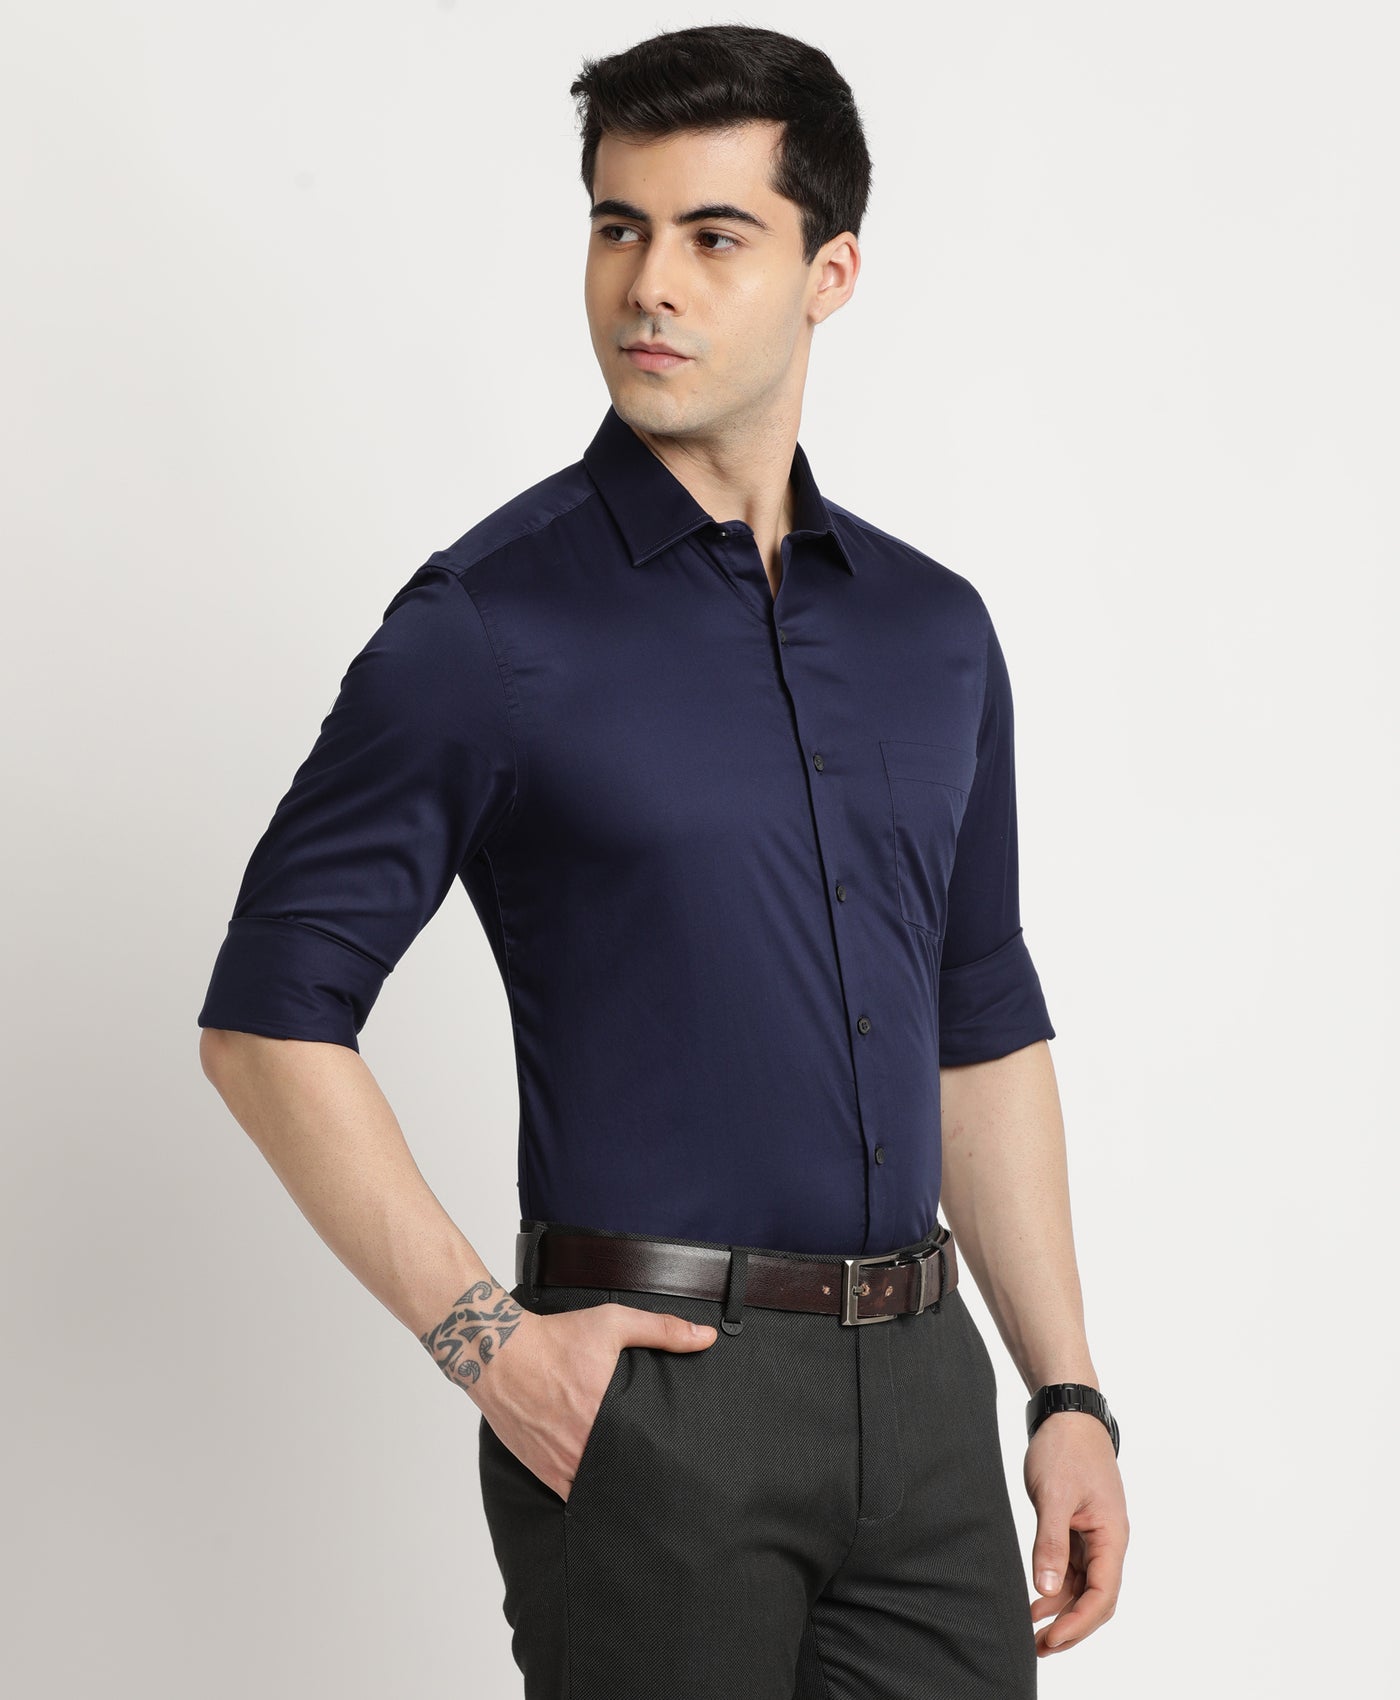 100% Cotton Navy Blue Plain Slim Fit Full Sleeve Formal Shirt